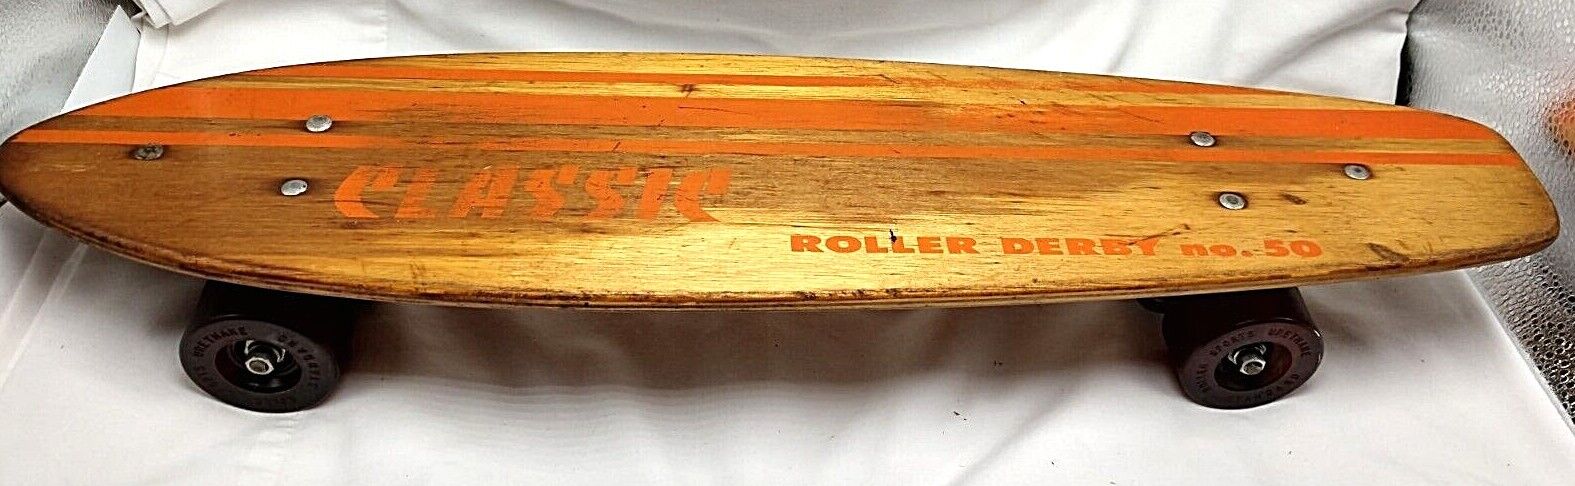 1960's Classic Roller Derby No. 50 Skateboard Wood W/ Original Trucks & Wheels